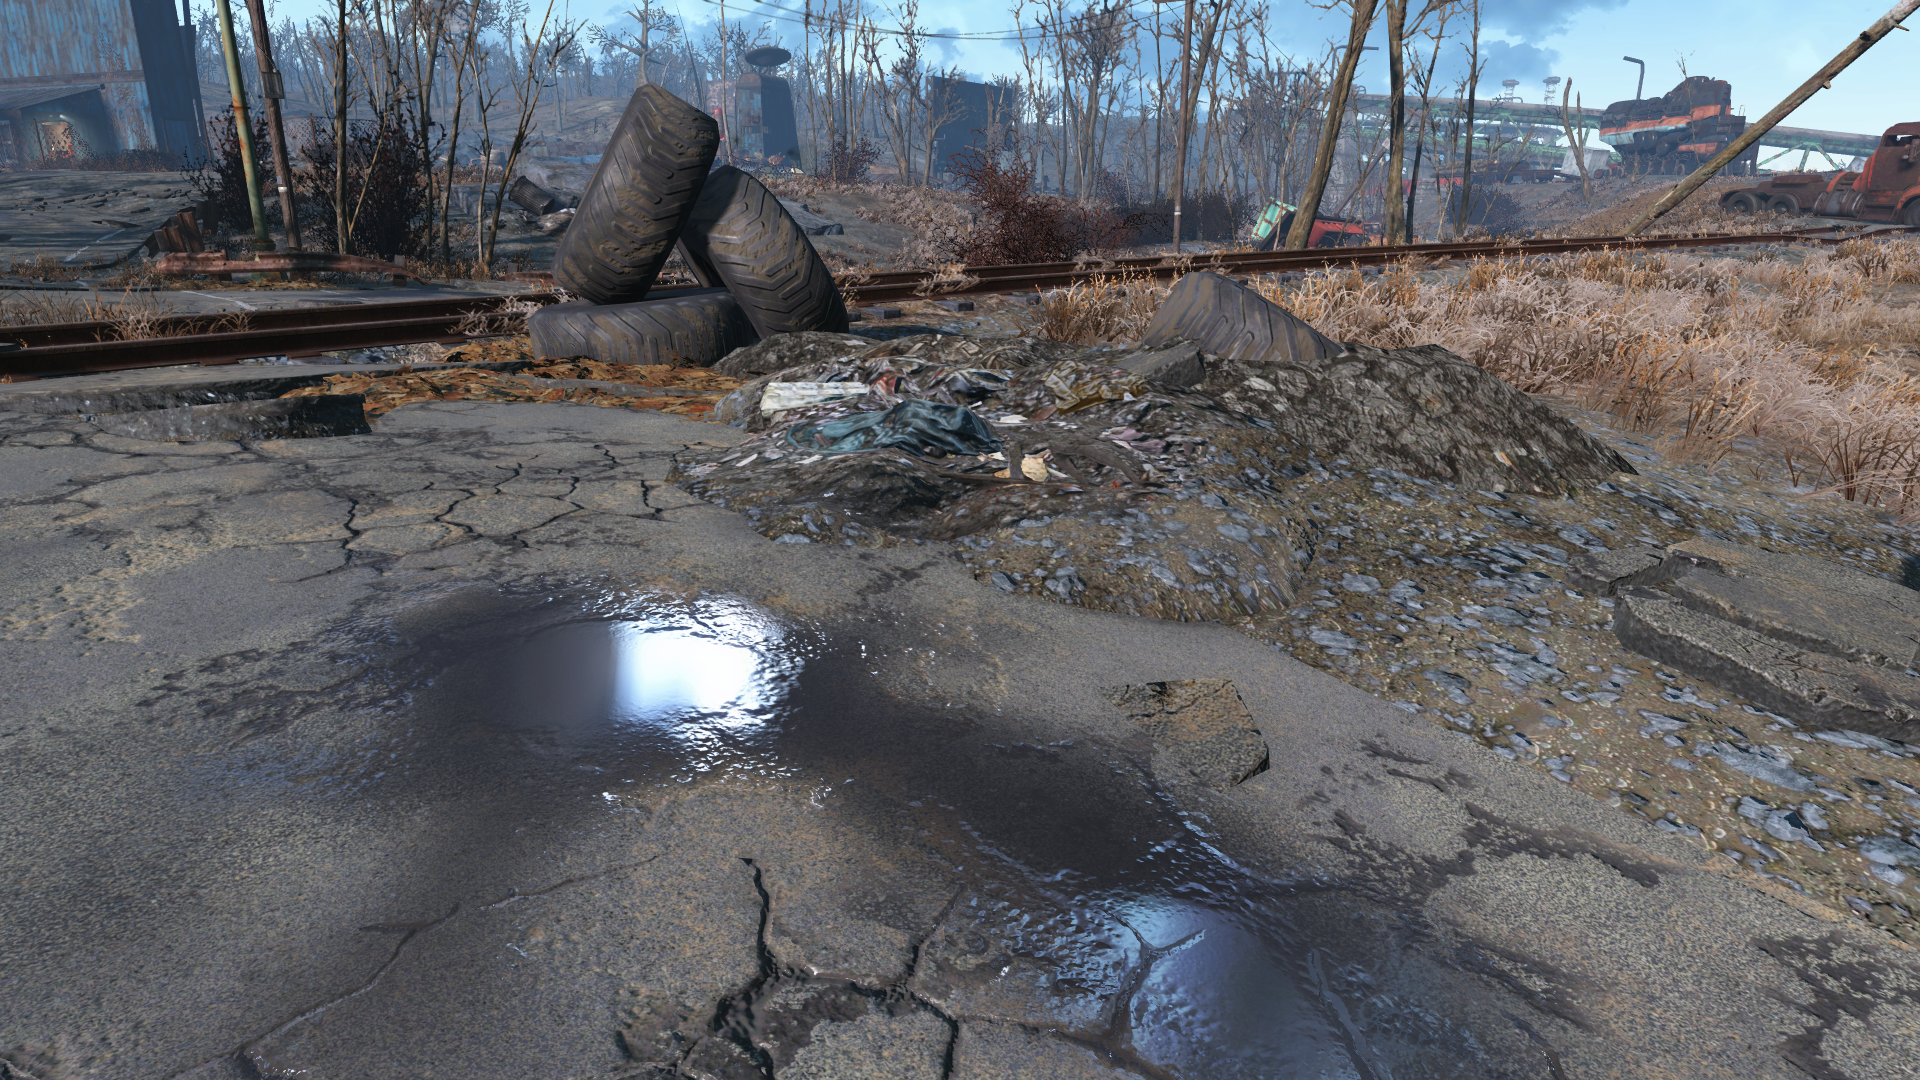 Fallout 4 high resolution texture pack comparison screenshots